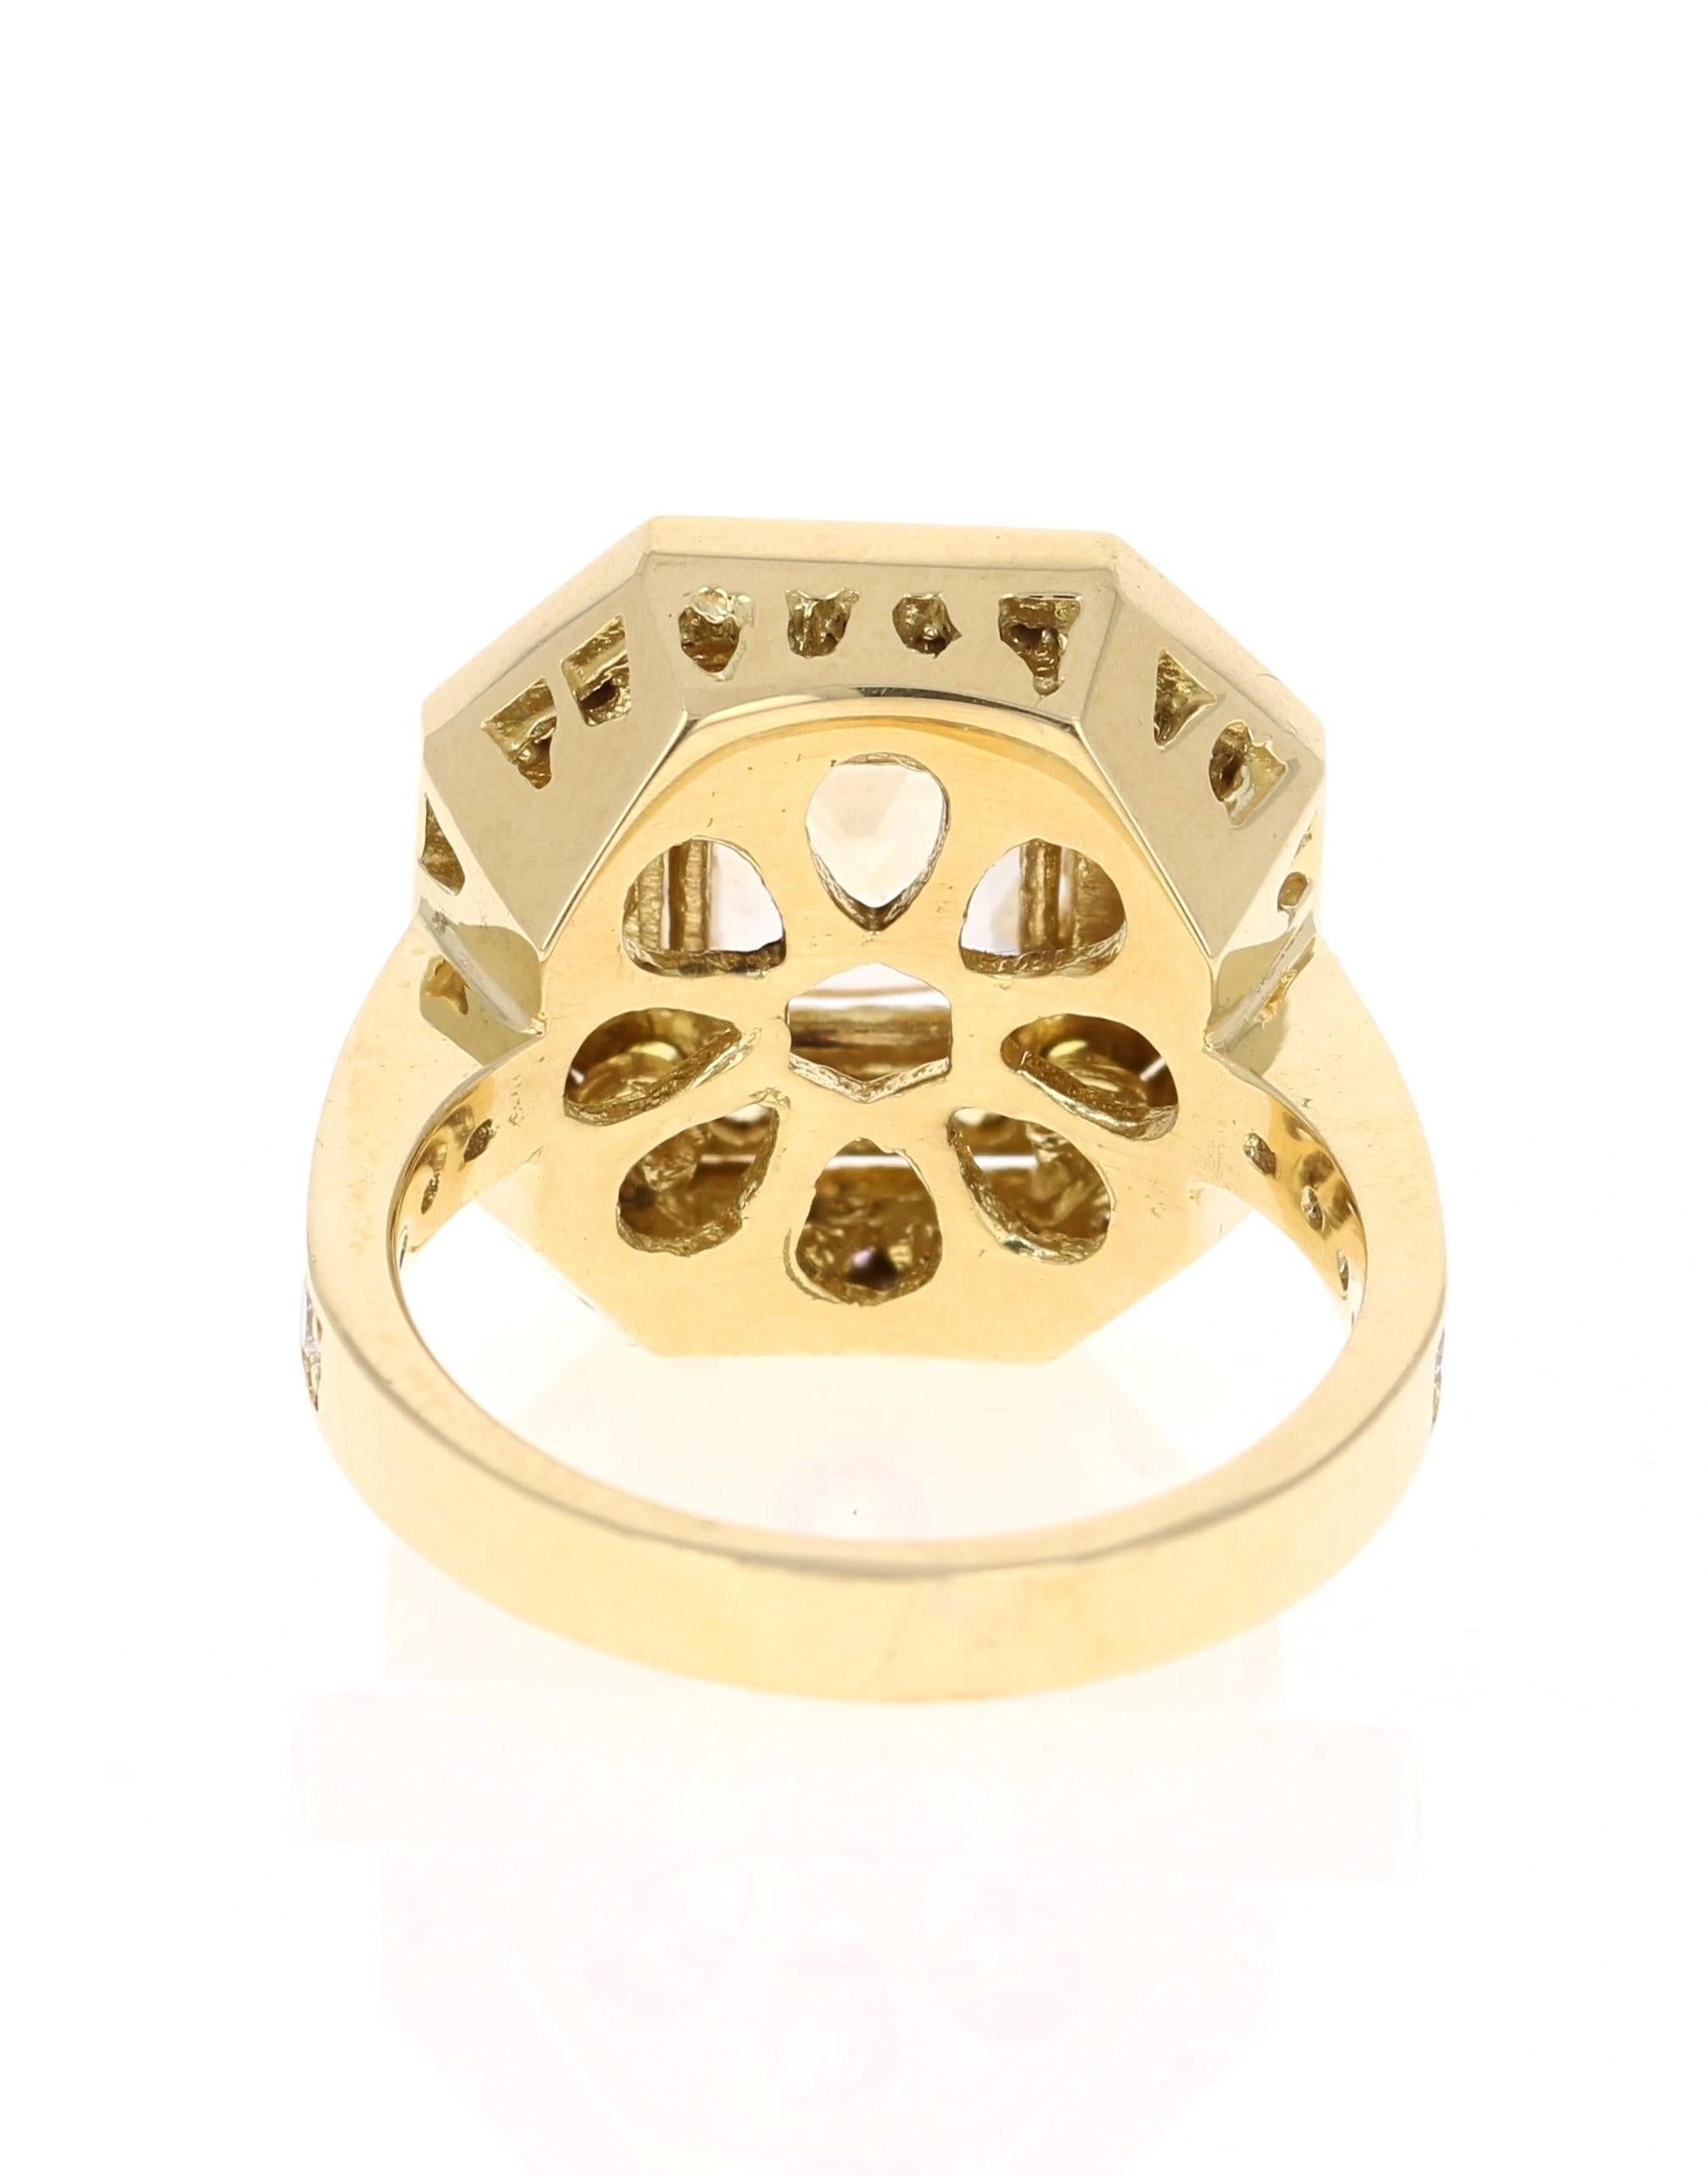 Cushion Cut GIA Certified 4.14 Carat Non-Heated Yellow Pink Sapphire Diamond 18K Gold Ring